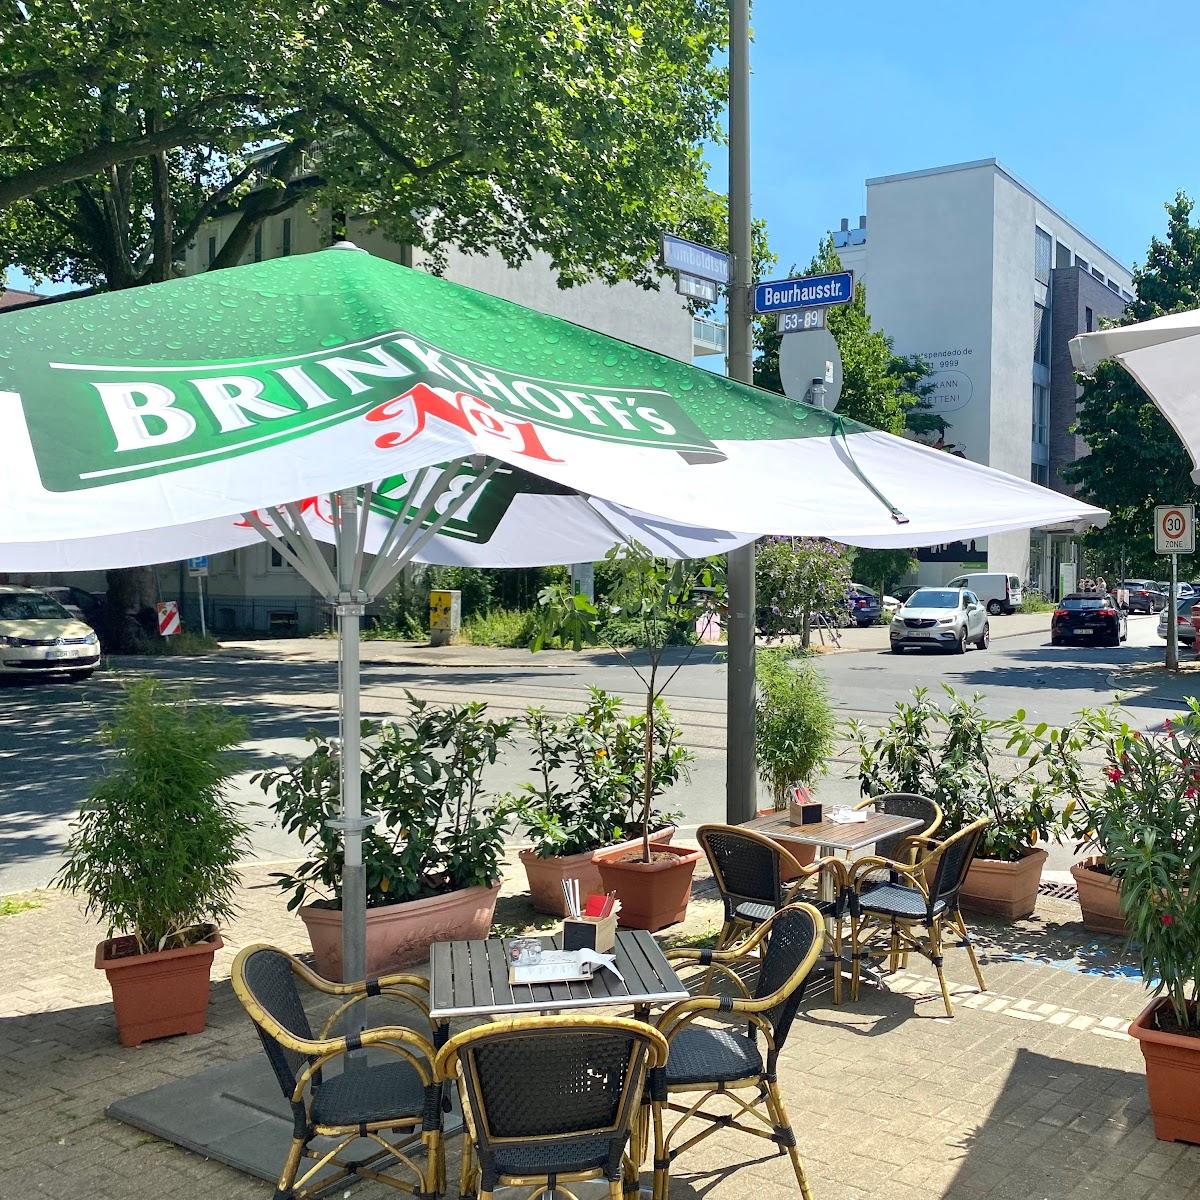 Restaurant "Due Fratelli" in Dortmund